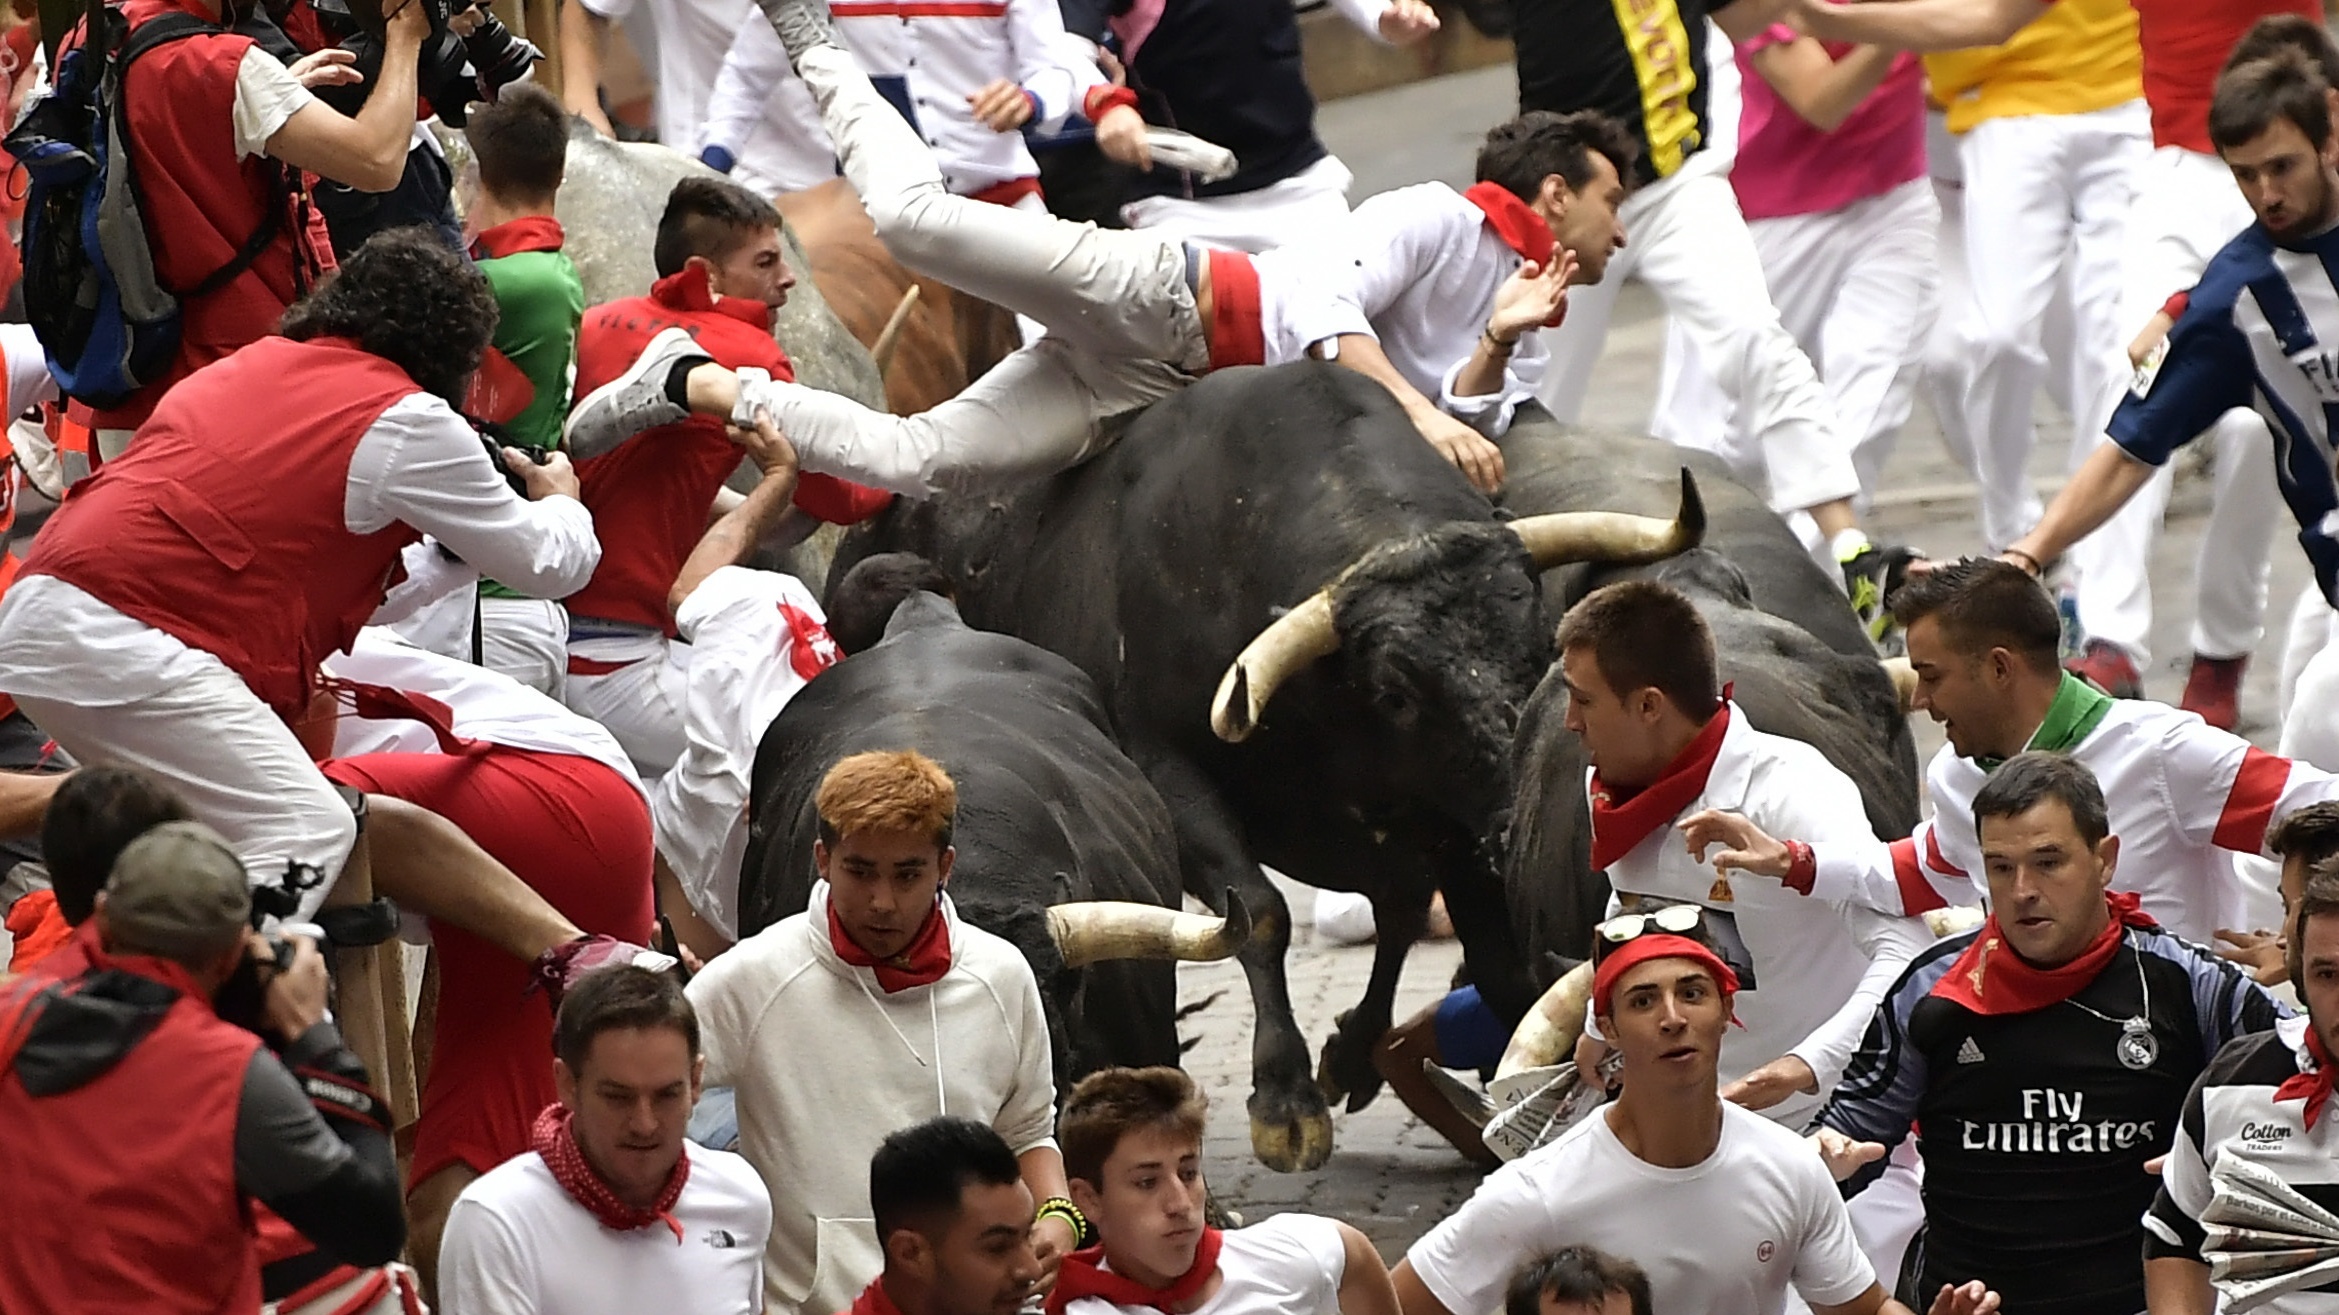 Six runners injured in final Pamplona bull run - The Bolton News